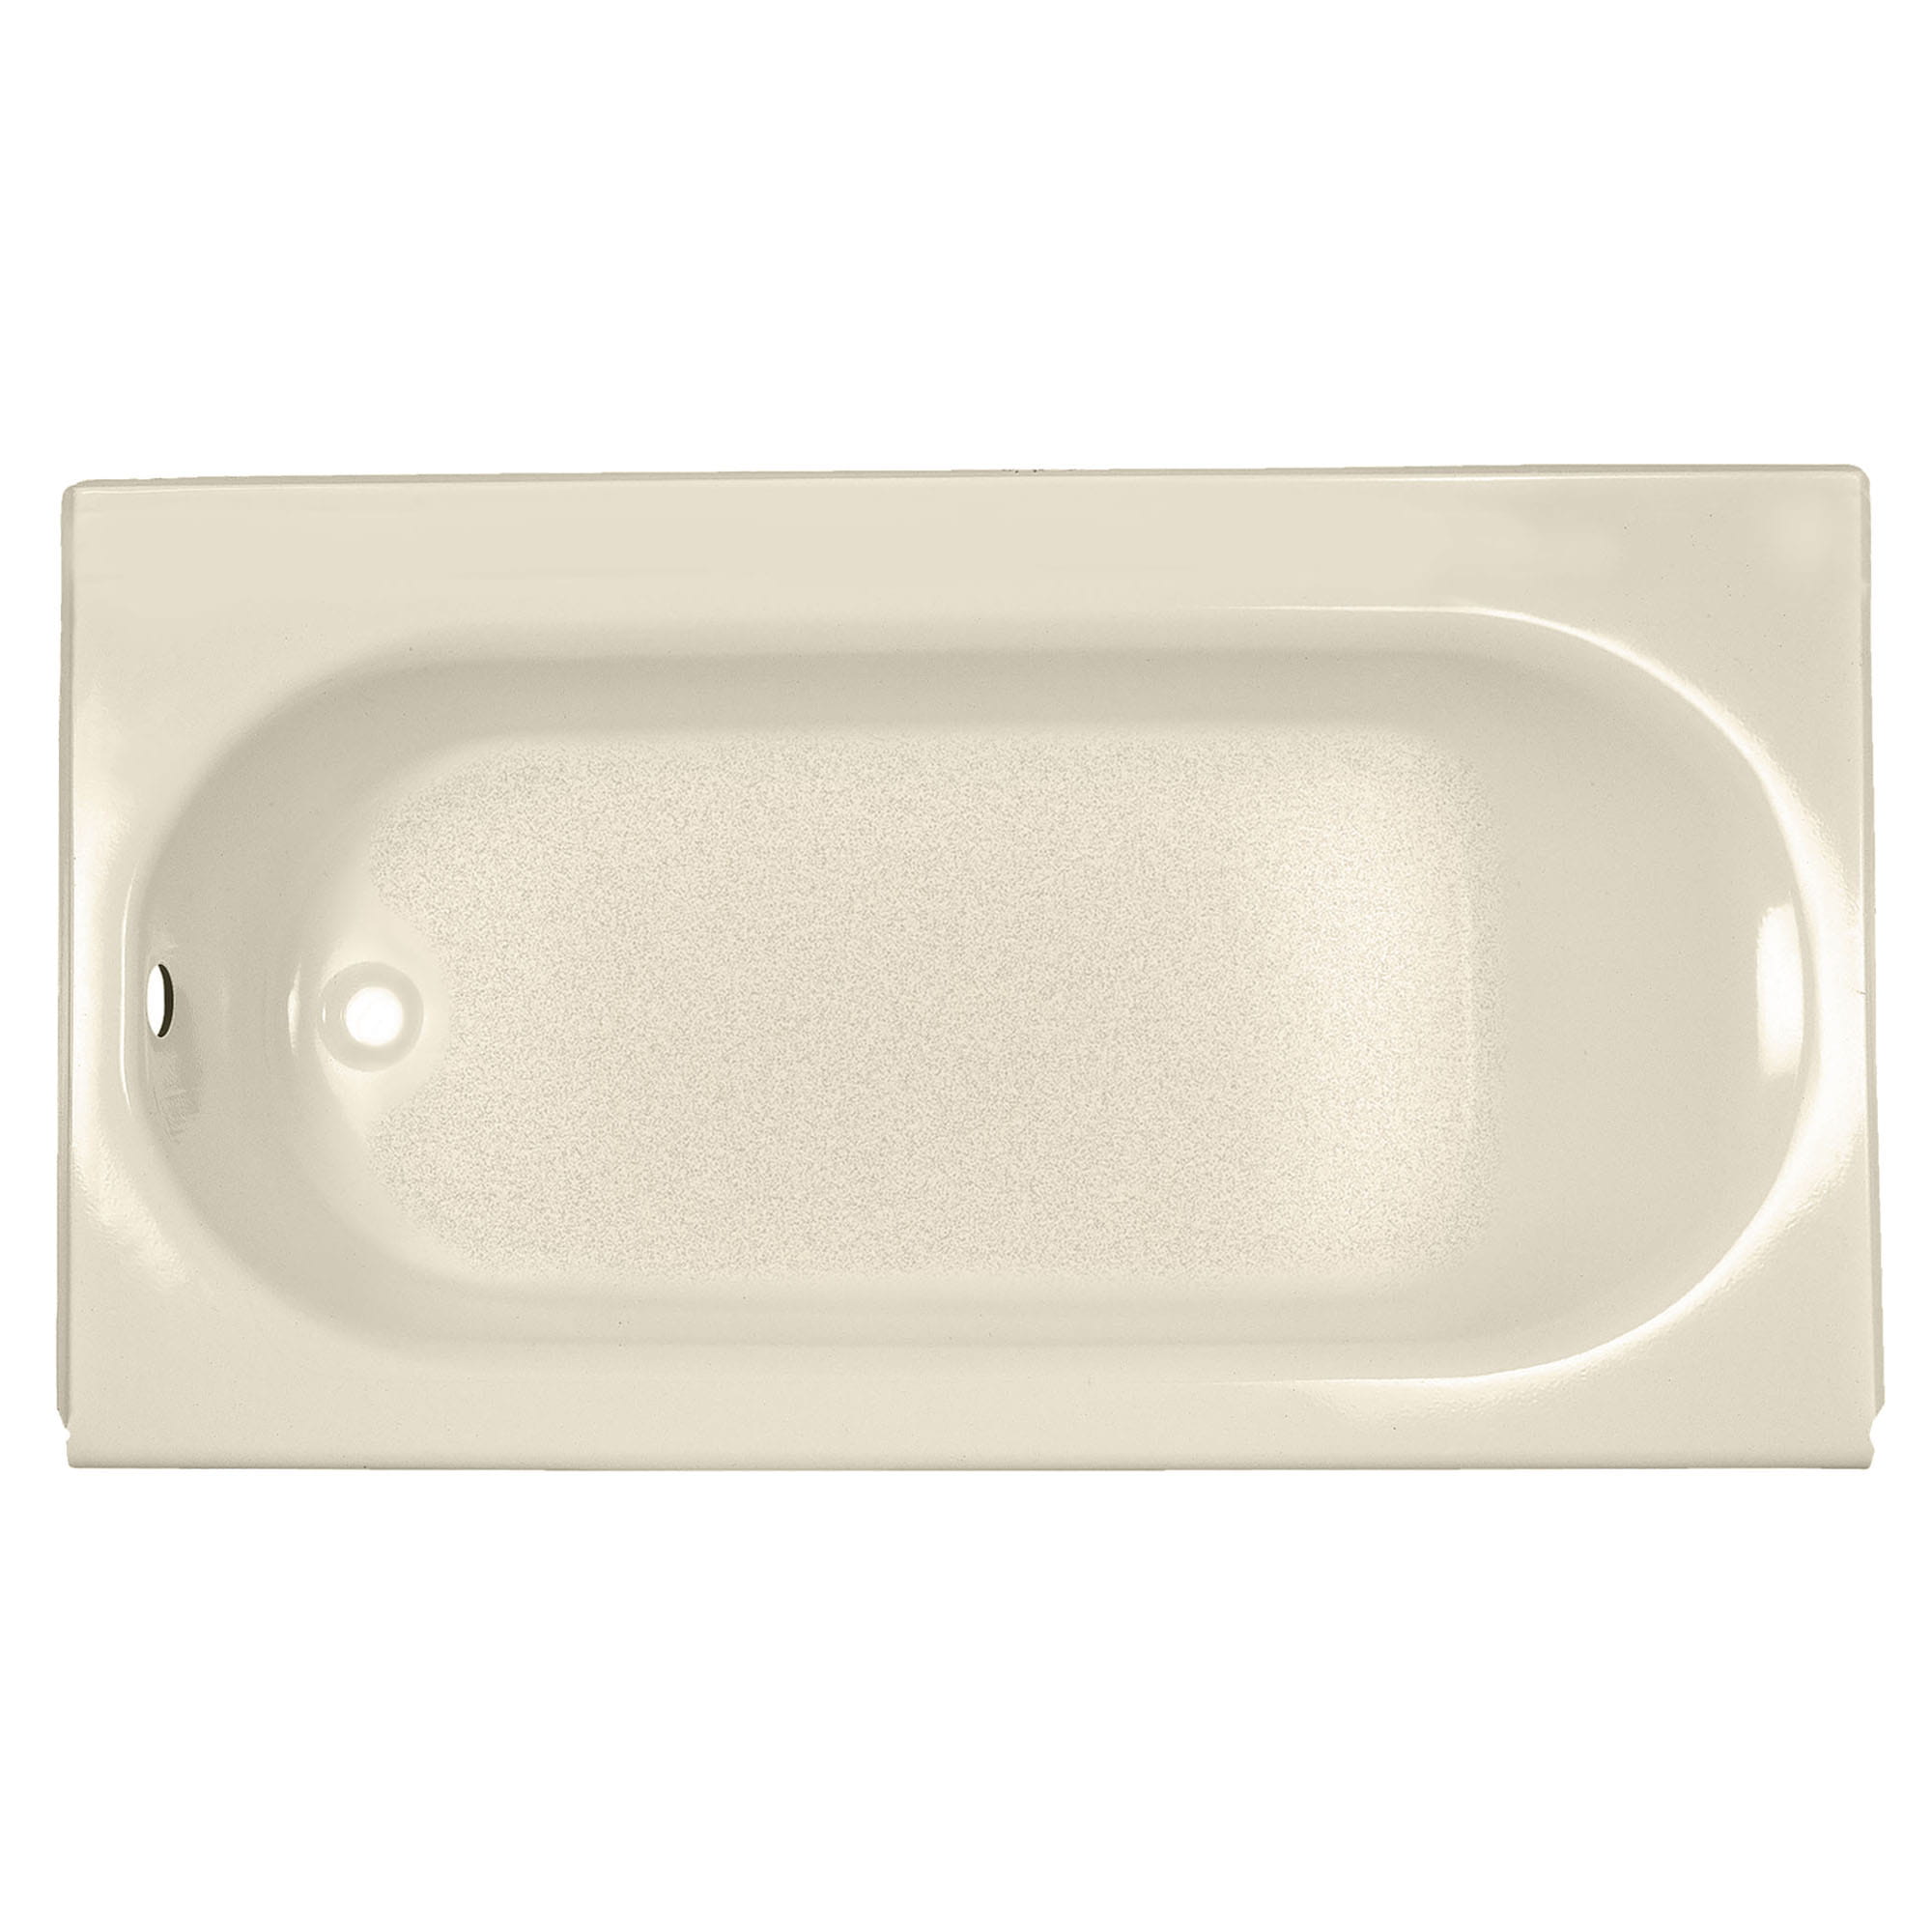 Princeton Americast 60 x 34 Inch Integral Apron Bathtub Left Hand Outlet With Luxury Ledge BONE